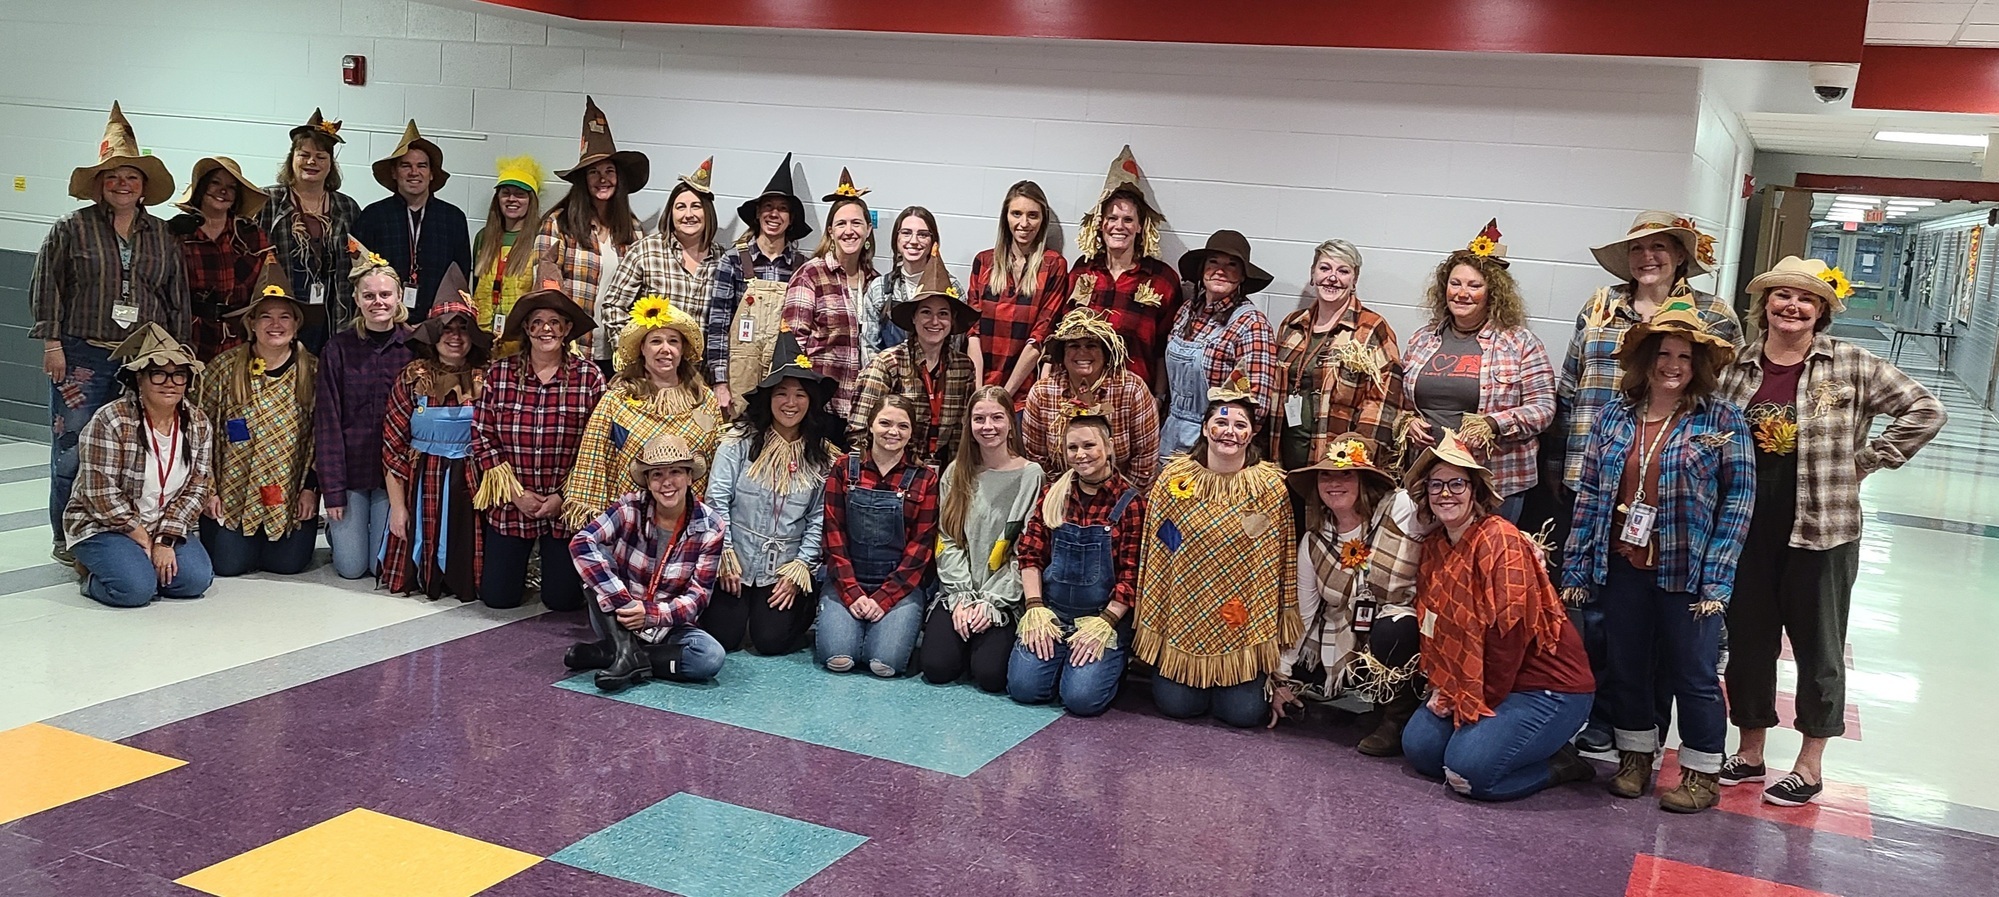 Davisburg staff dressed as scarecrows